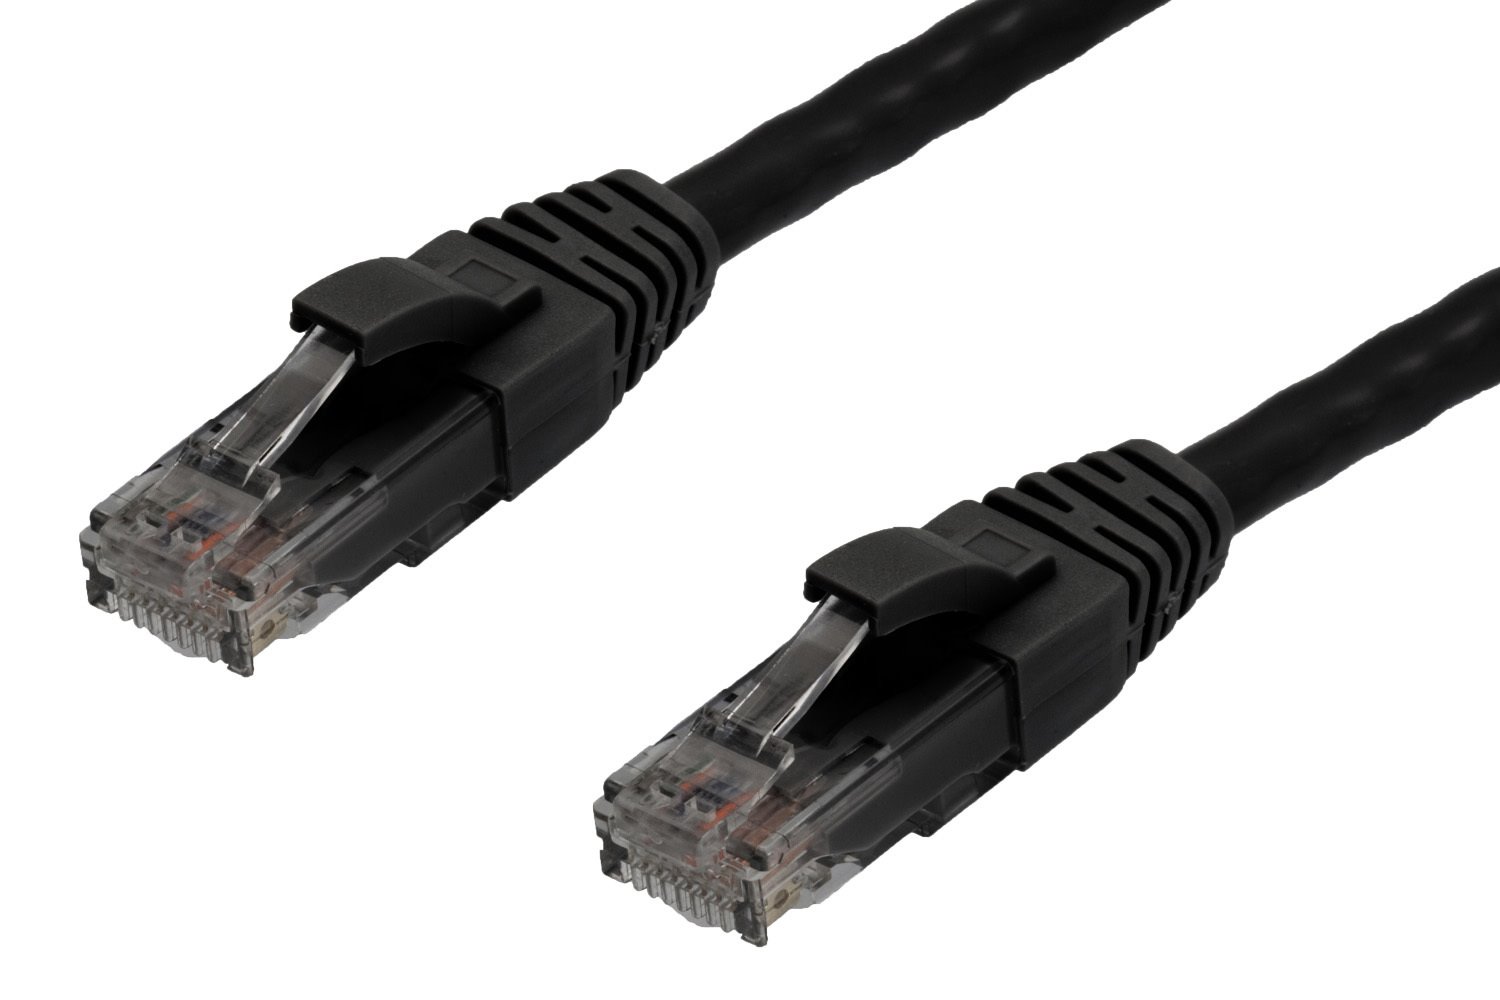 4Cabling 10M RJ45 Cat6 Ethernet Cable. Black